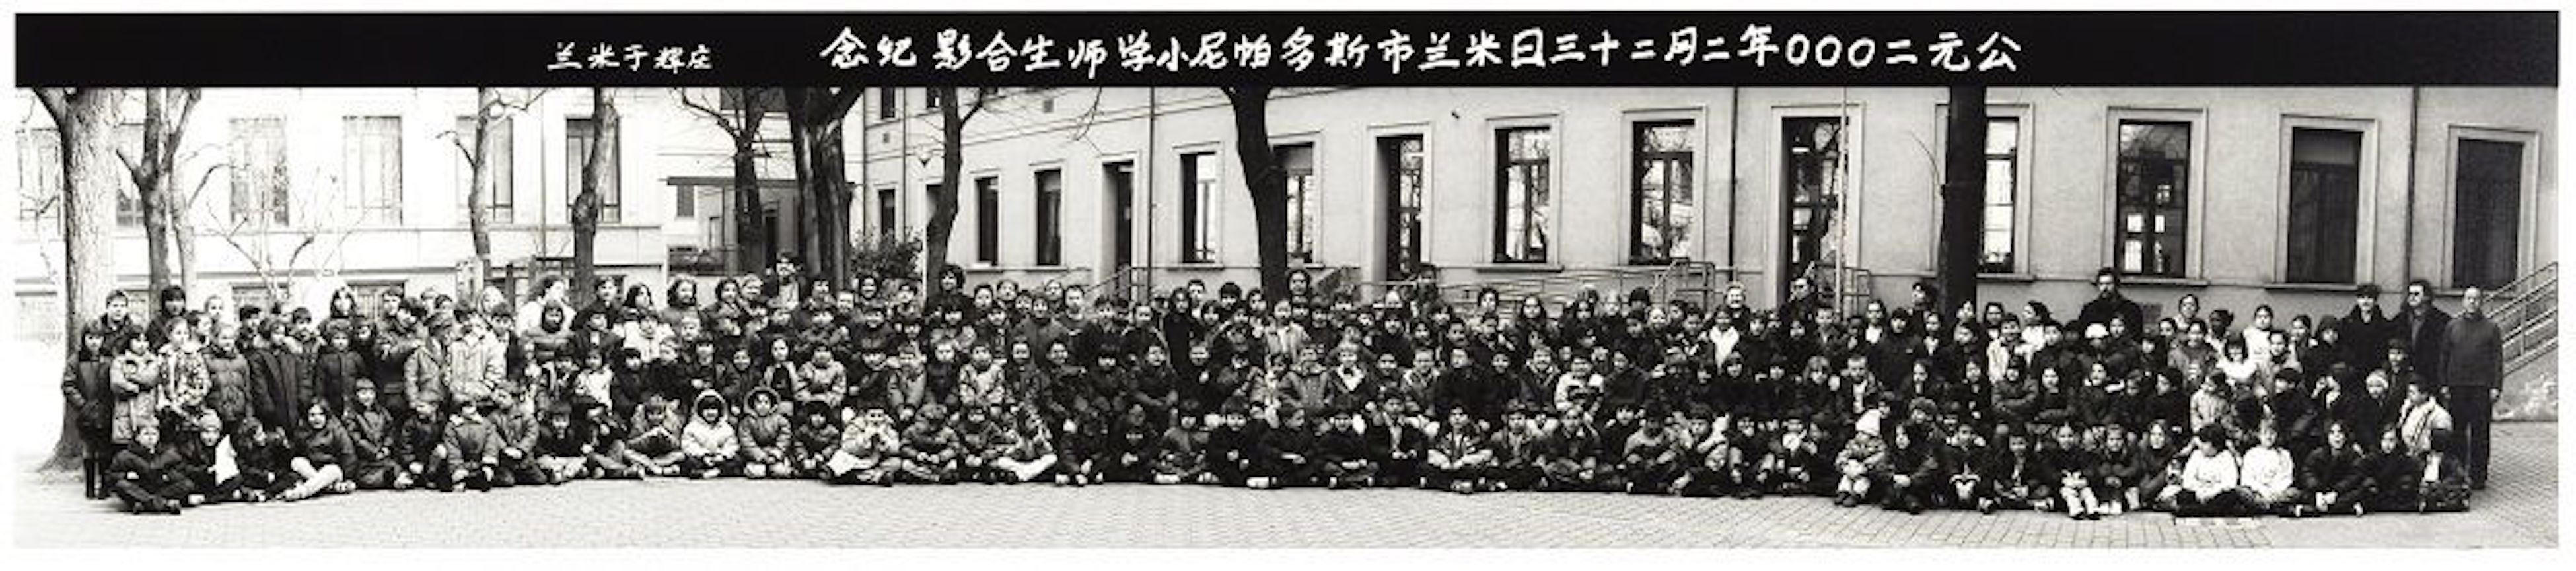 23 February 2000 Stoppani Elementary School - Original Photo by Zhuang Hui, 2000